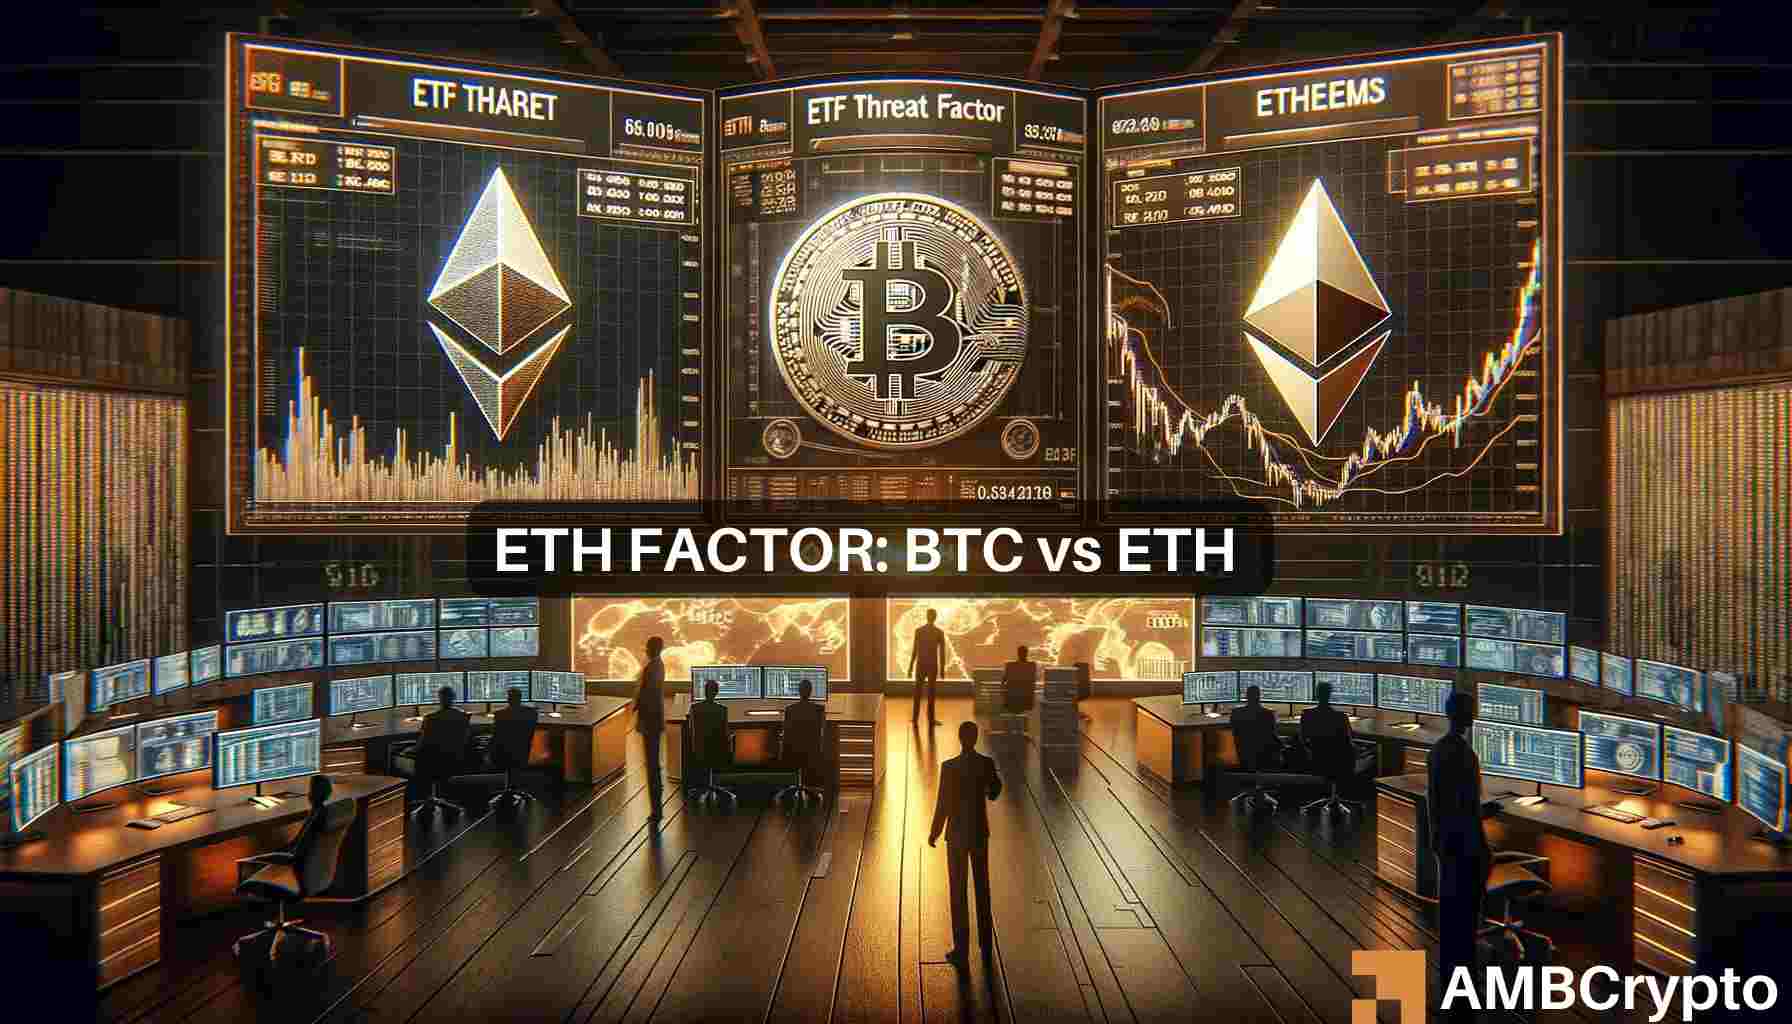 Is Ethereum ETF threat real? Analyst predicts ETH will flip BTC